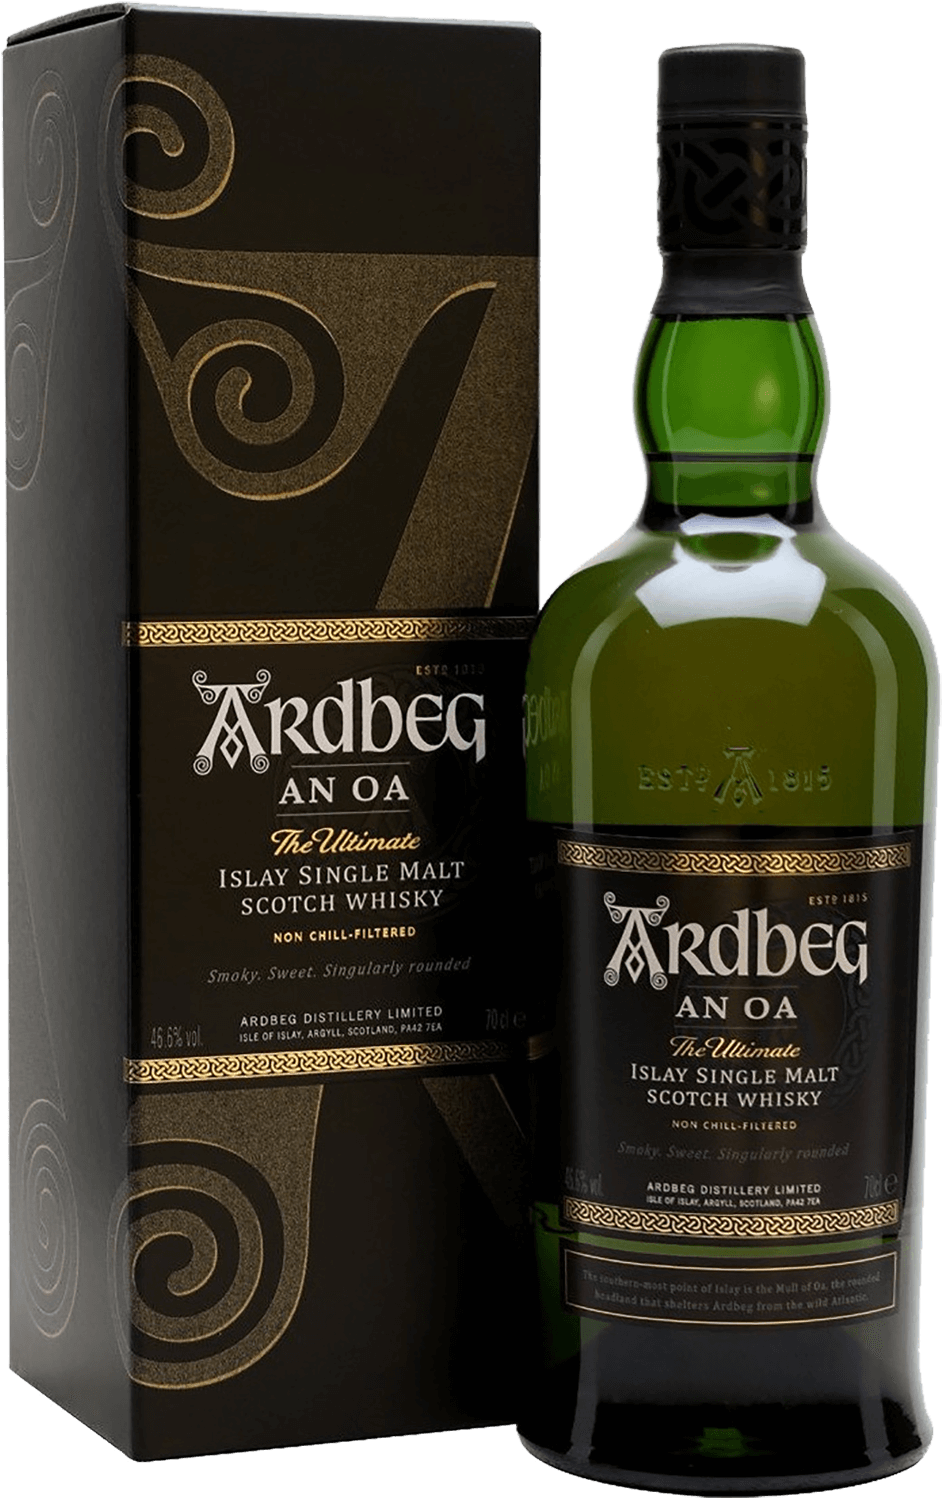 Ardbeg An Oa Single Malt Scotch Whisky ardbeg corryvreckan single malt scotch whisky gift box